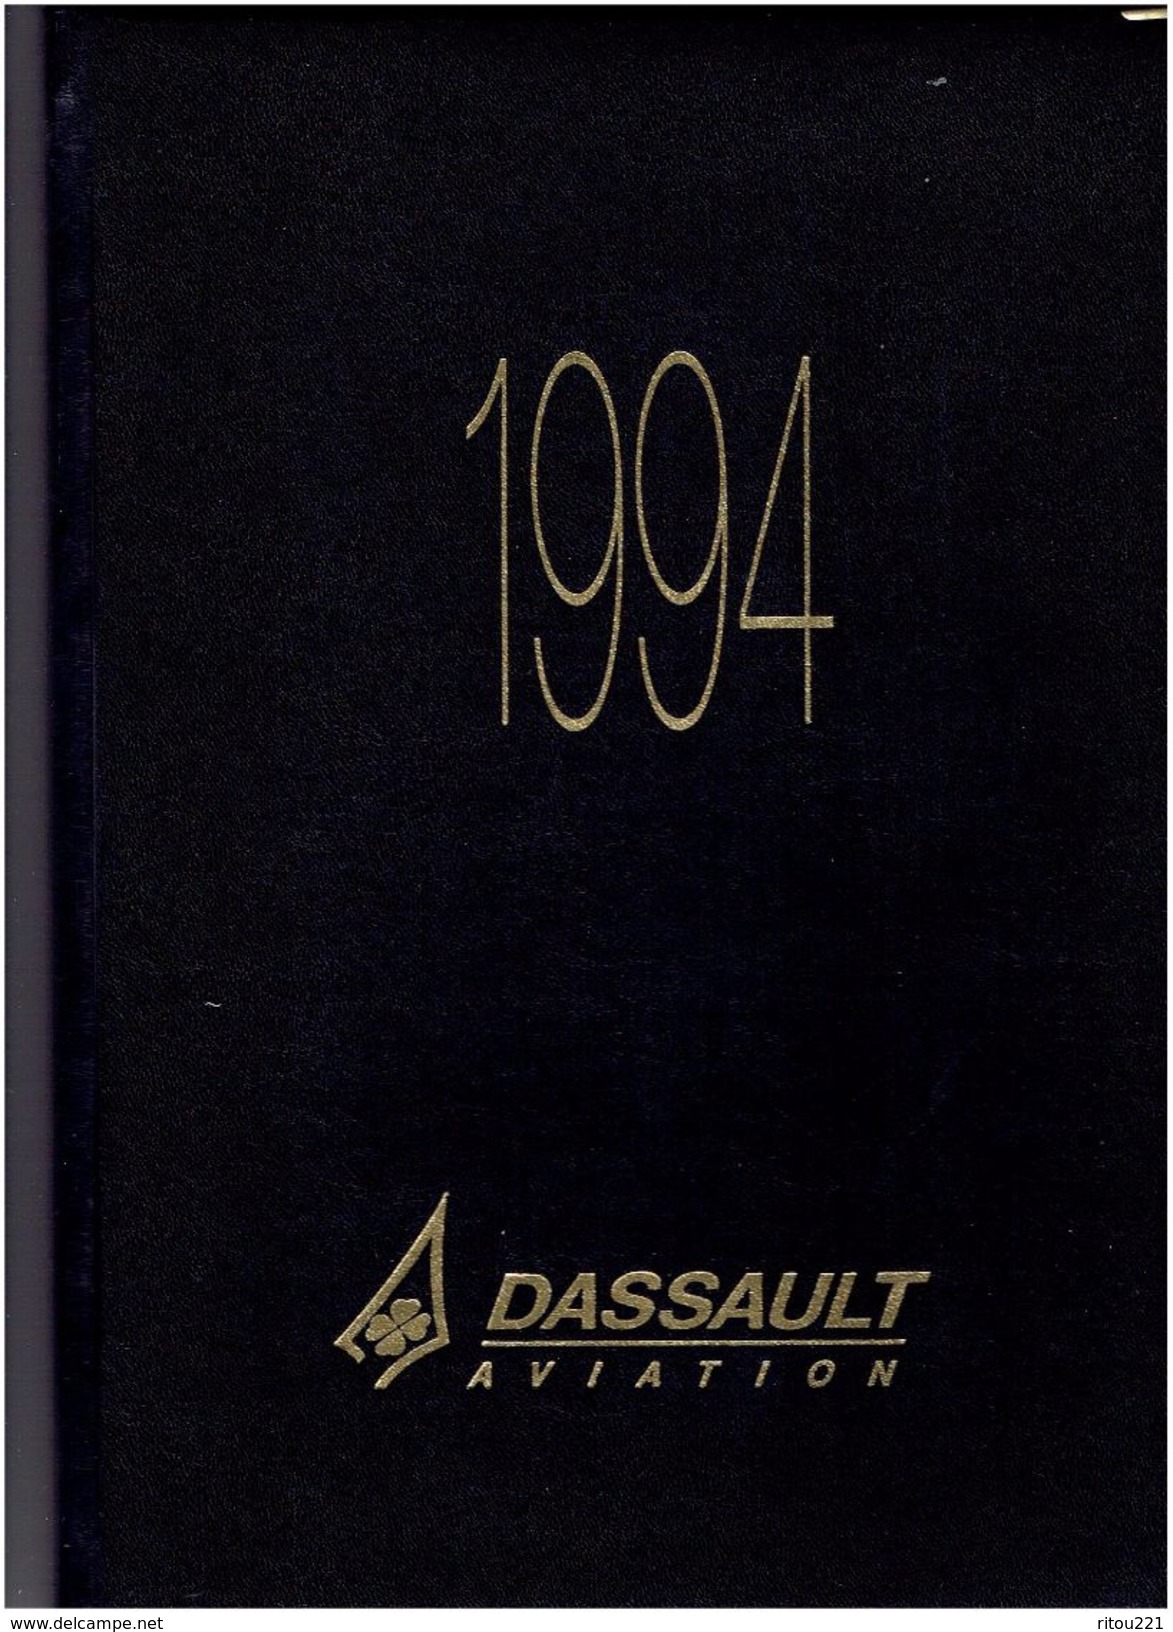 Agenda 1994 - DASSAULT AVIATION - Avion ESPACE VOITURE DE COURSE PEUGEOT 905 Esso HELARY BOUCHUT - Stationery